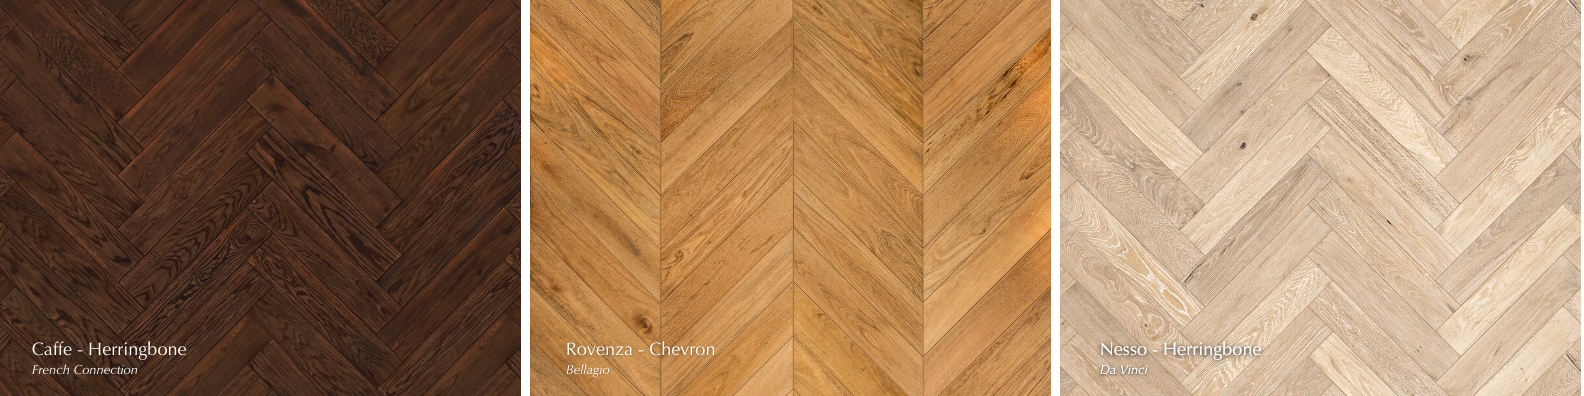 Hardwood Flooring Trends for 2022 - Garrison Collection